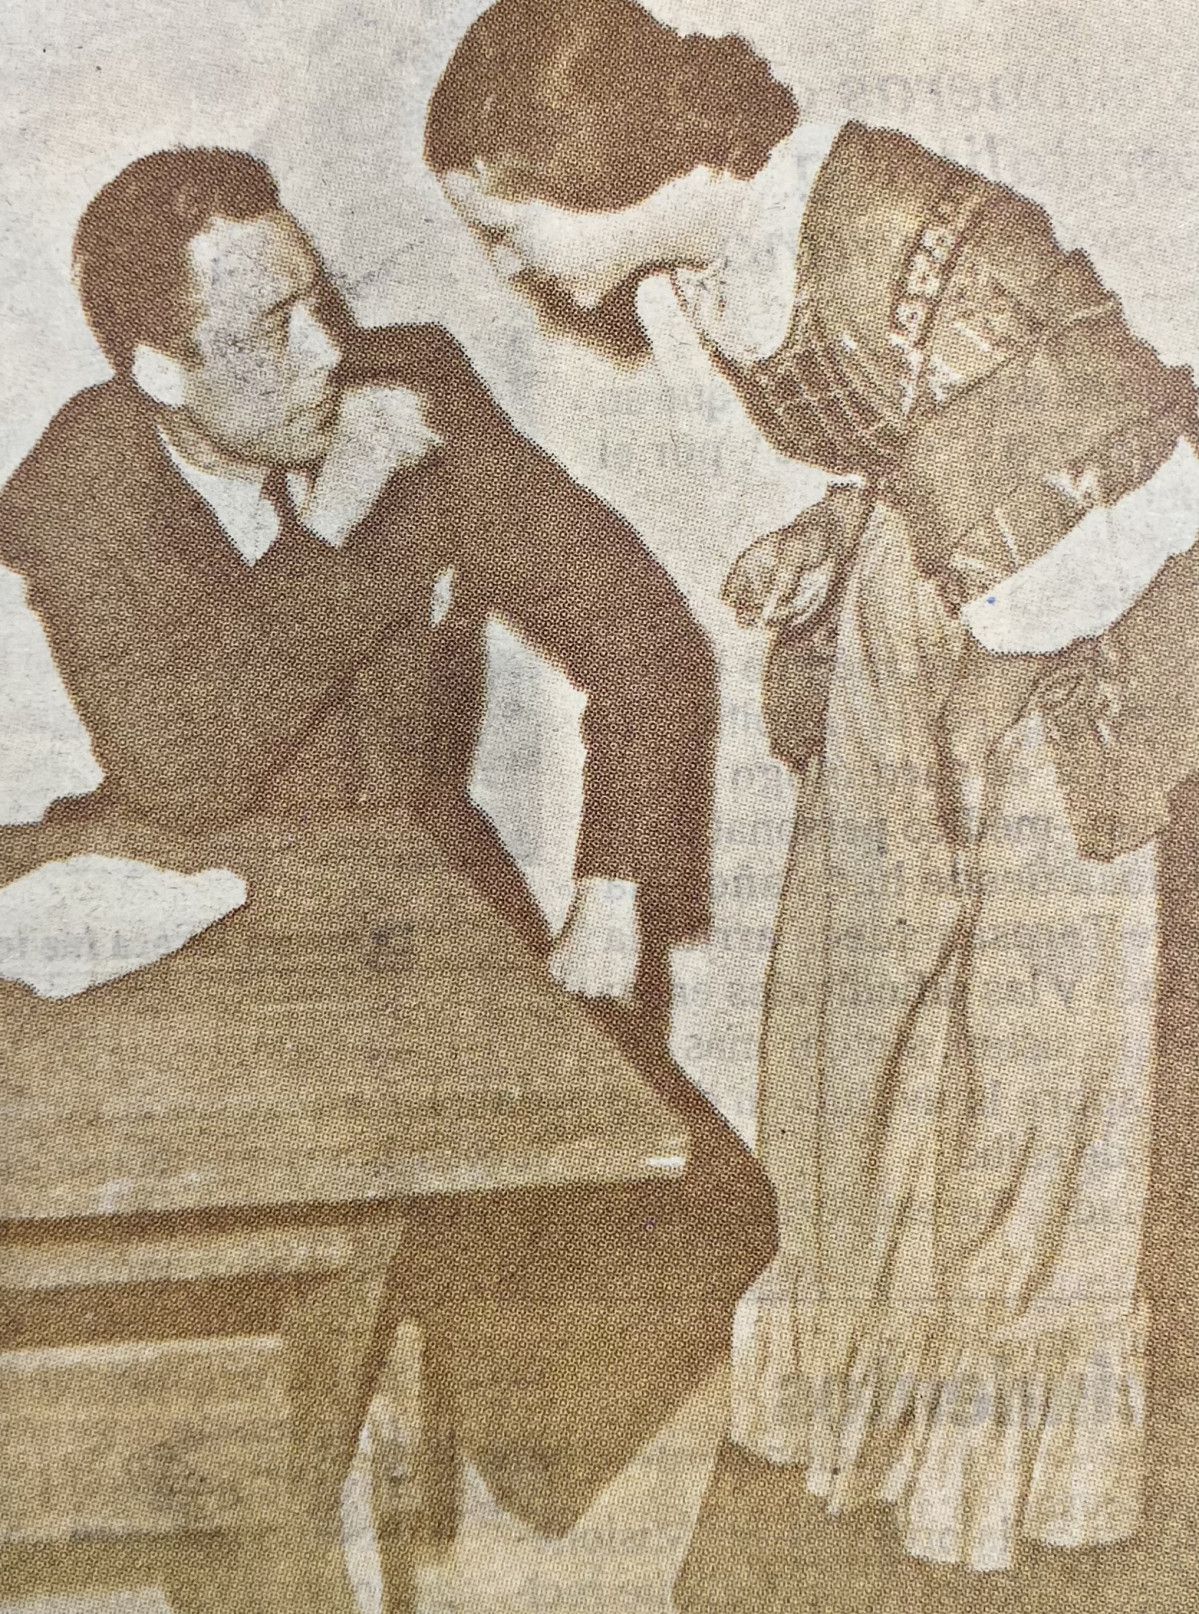 Maria Casares con Albert Camus